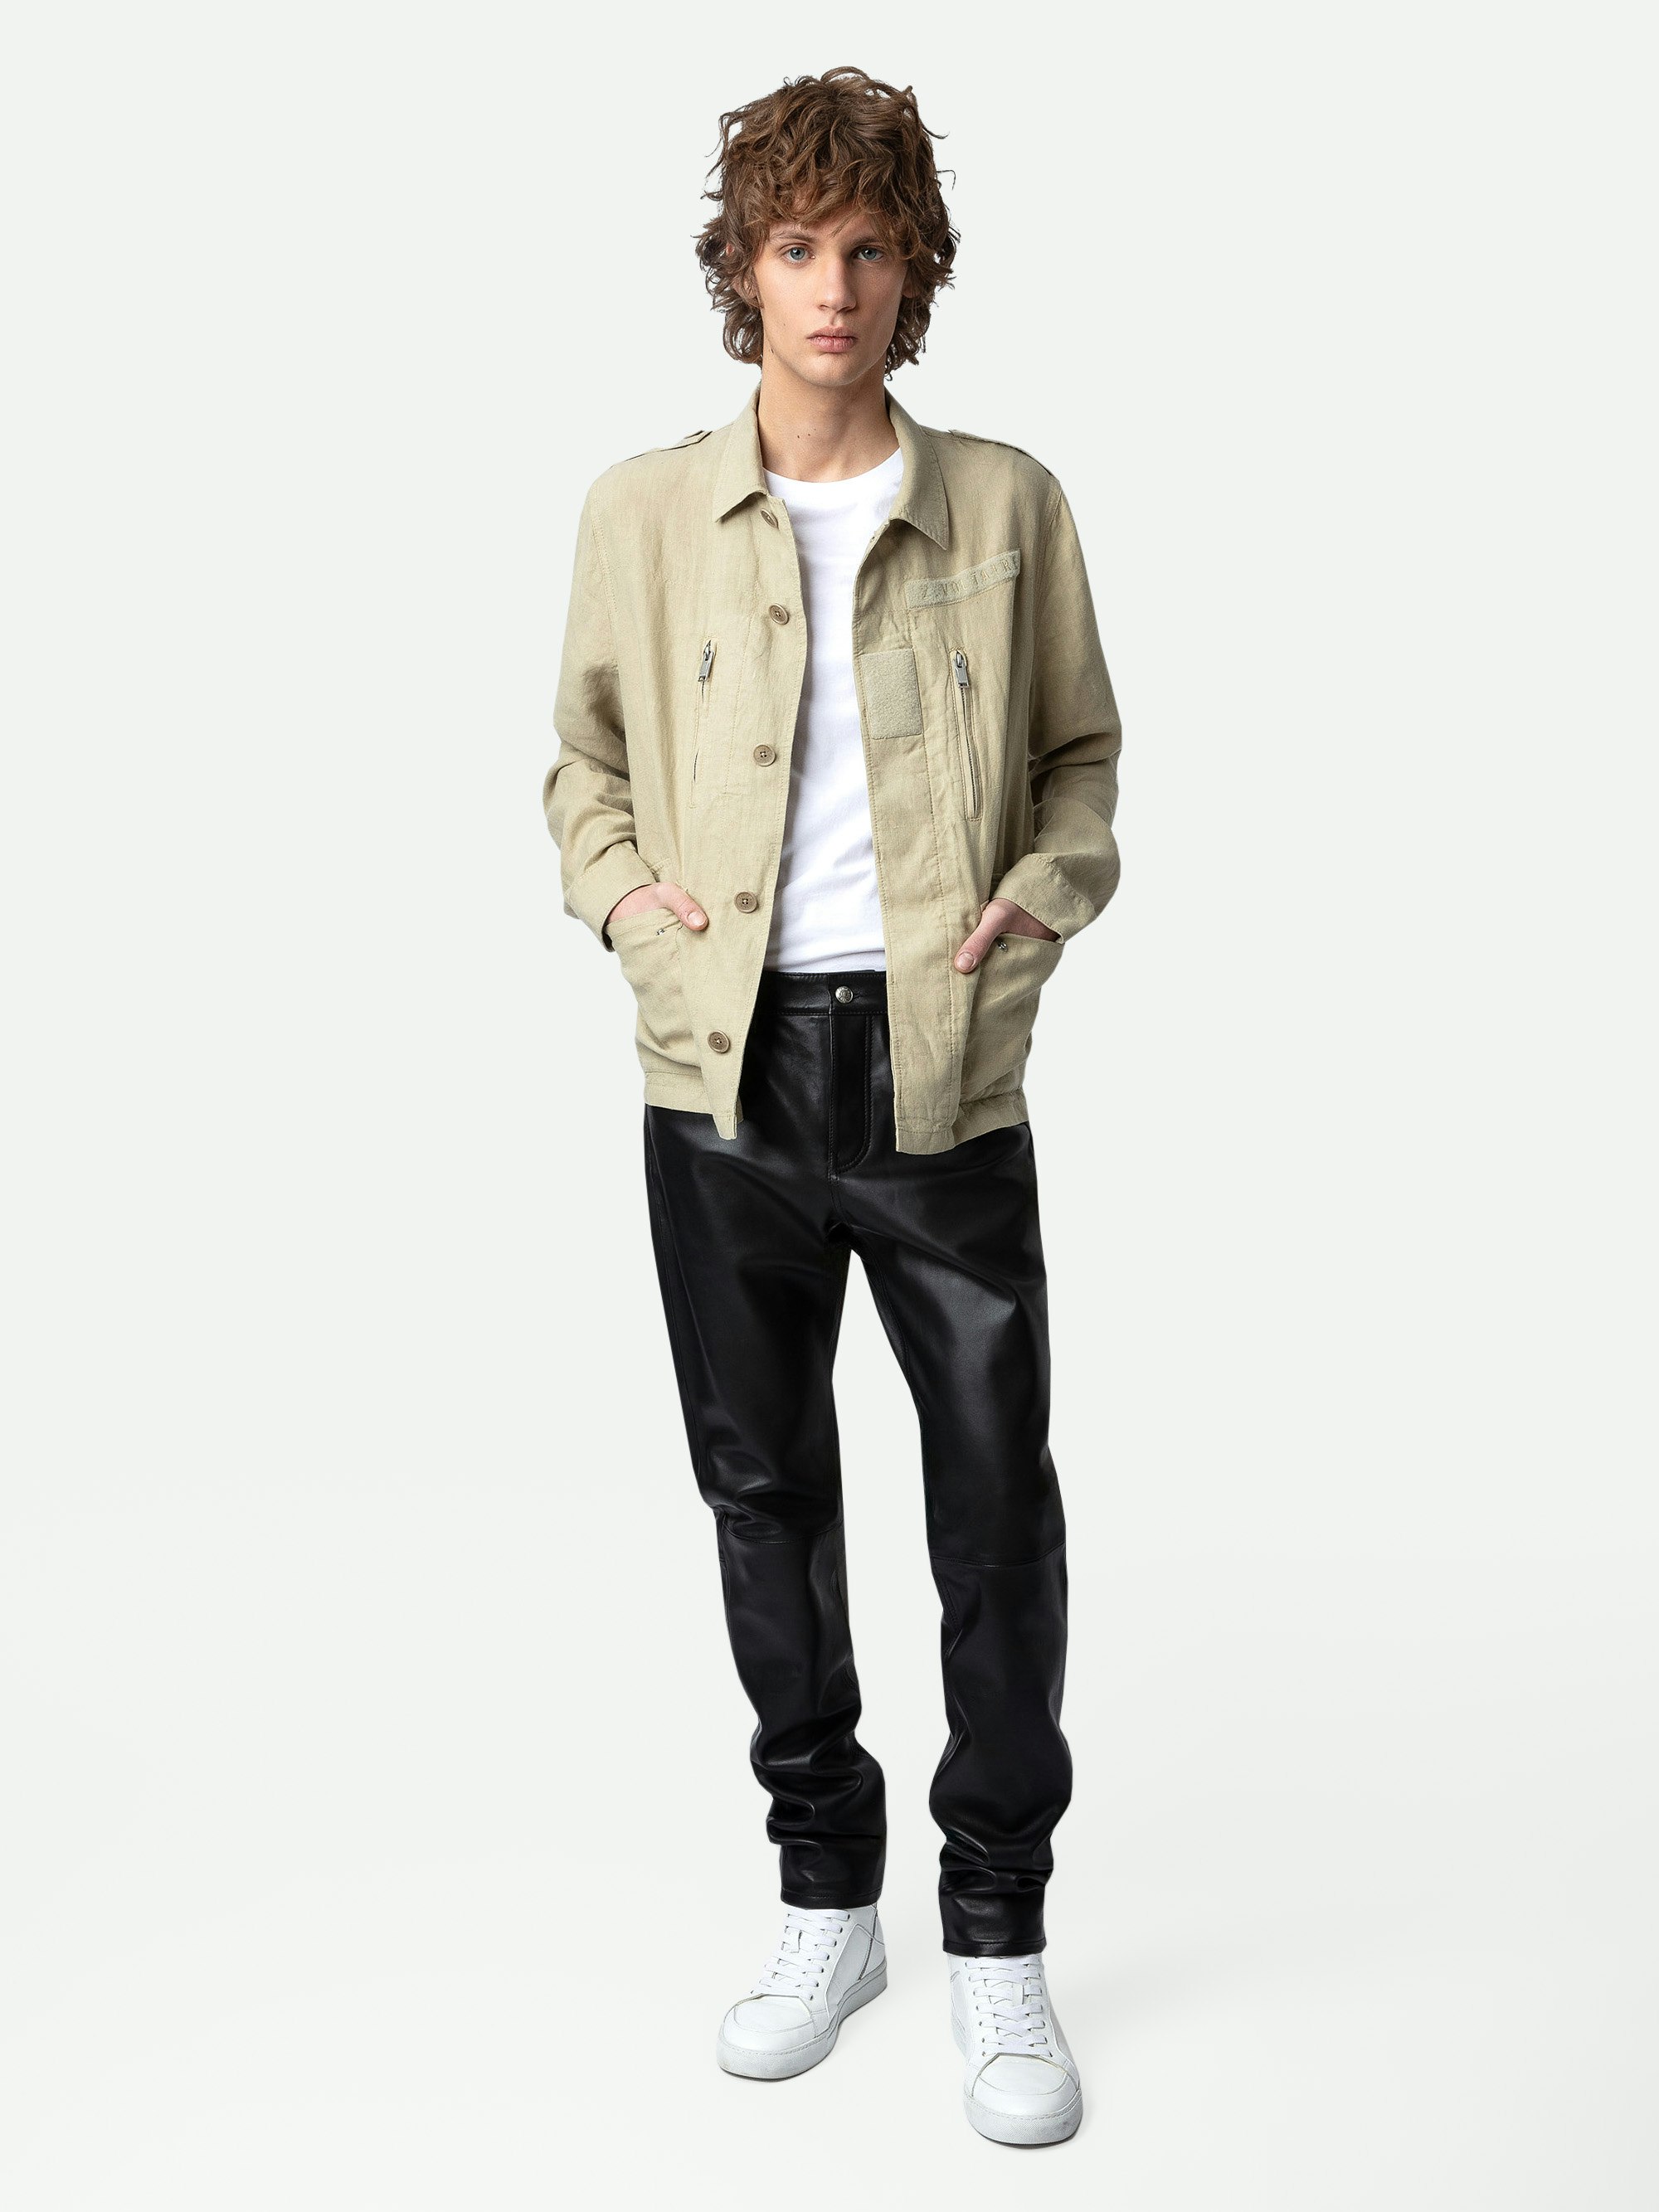 Kido Linen Jacket - Men's light beige military style jacket.